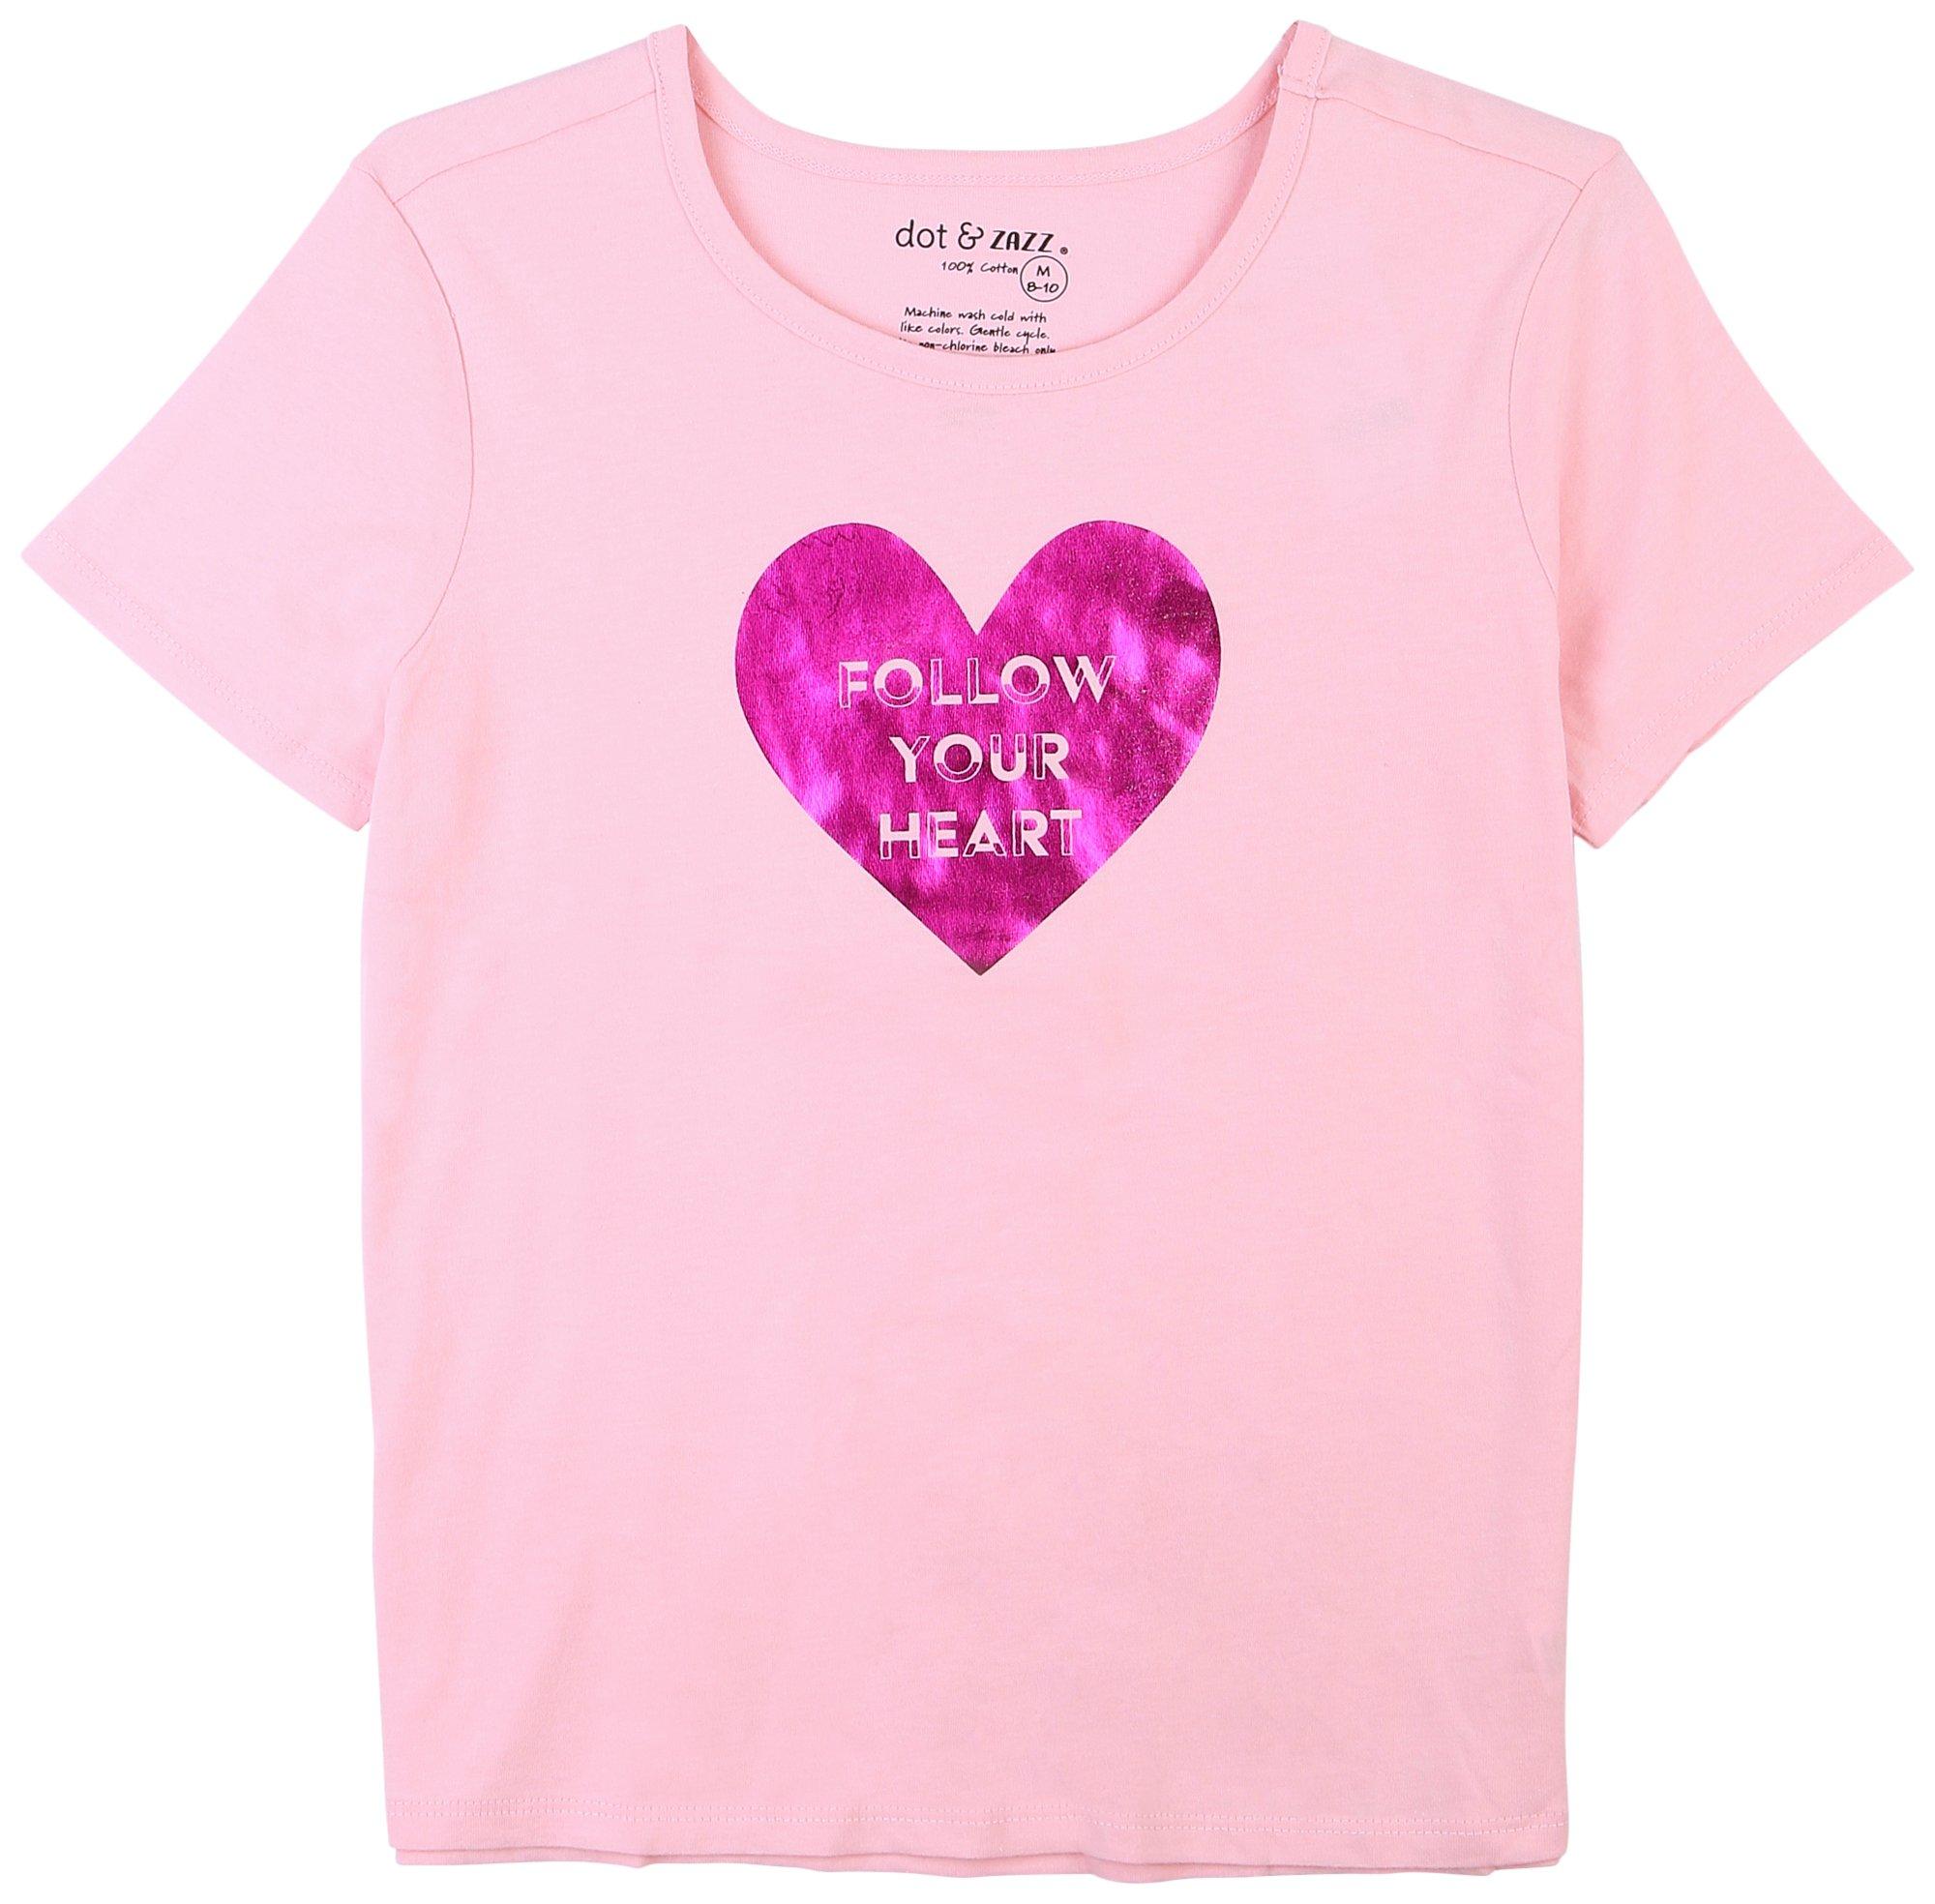 DOT & ZAZZ Little Girls Valentine's Heart Short Sleeve Top